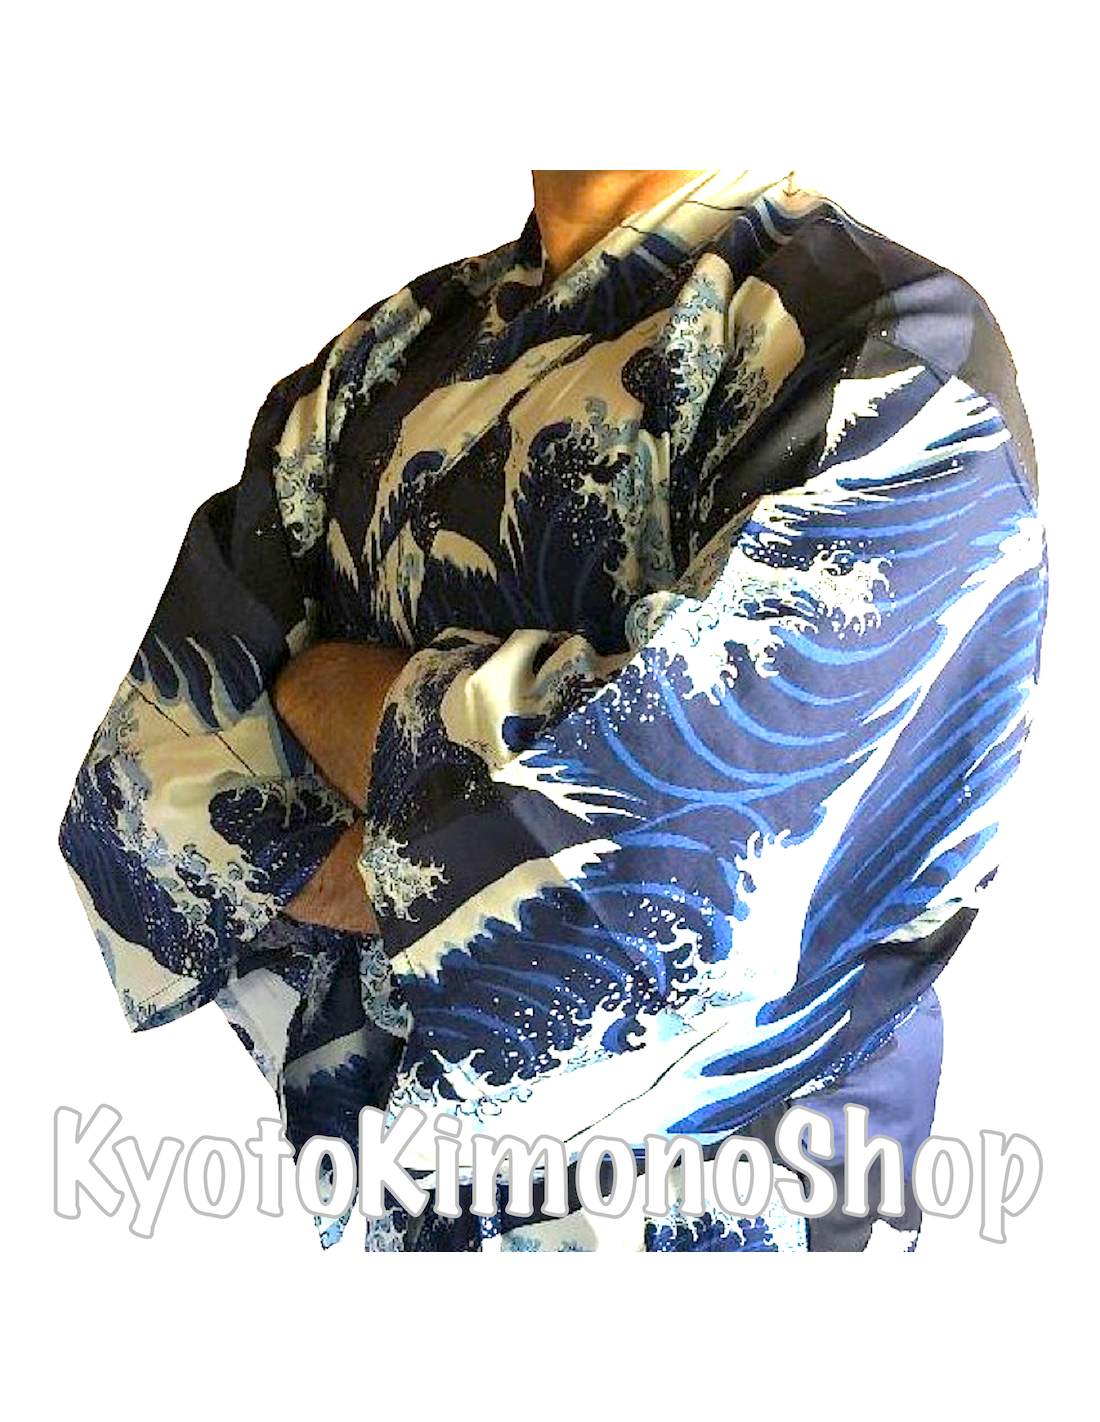 Men's Japanse Kimono Yukata Long Robe cotton (Large size,60/Navy Sumo)  Halloween Costumes Sleepwear Nightgown Bathrobe Summer Festivals Party  Samurai